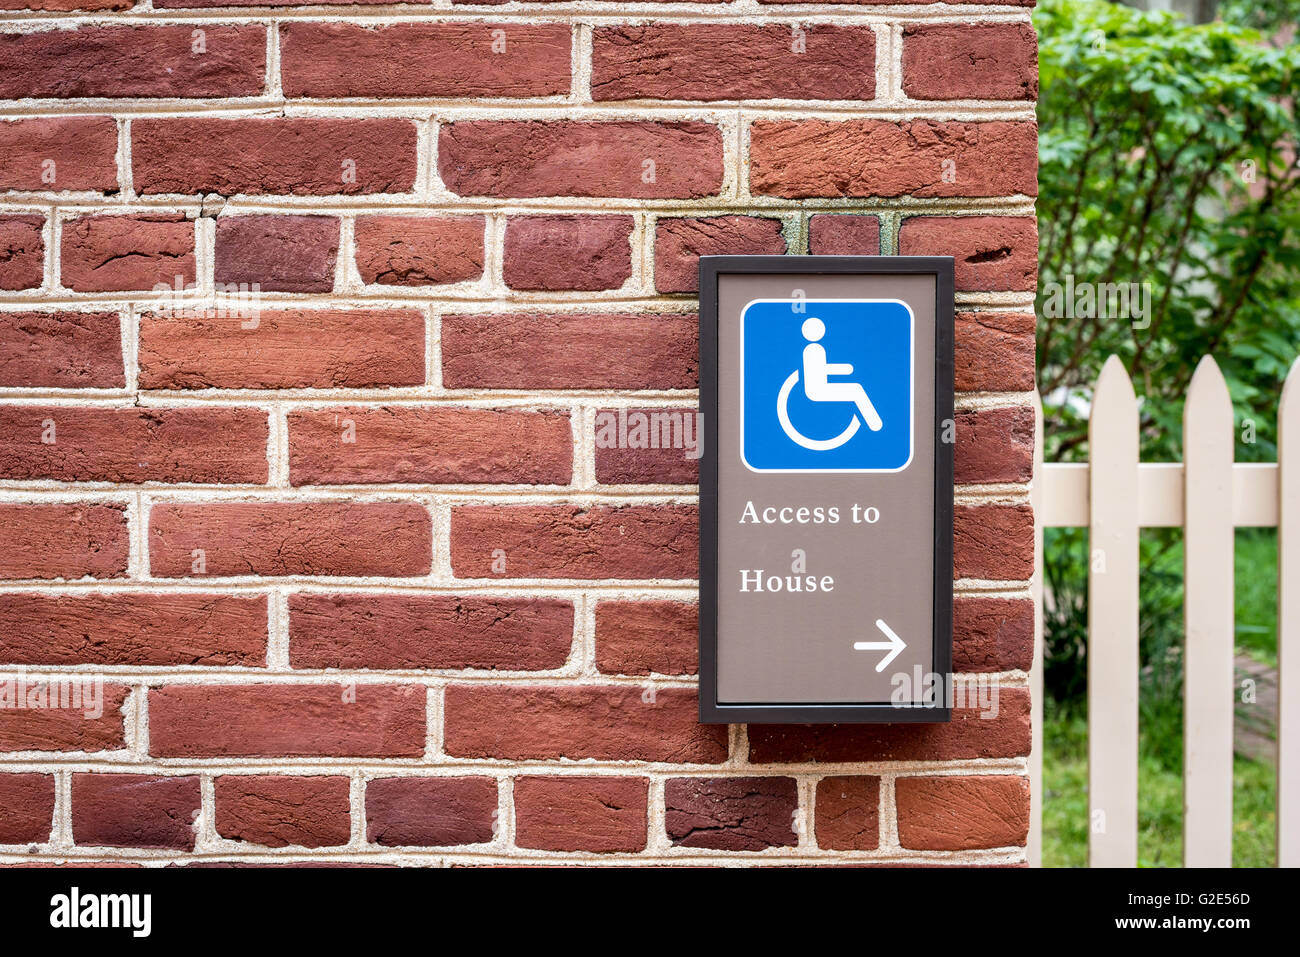 Handicap access sign on brick wall Stock Photo